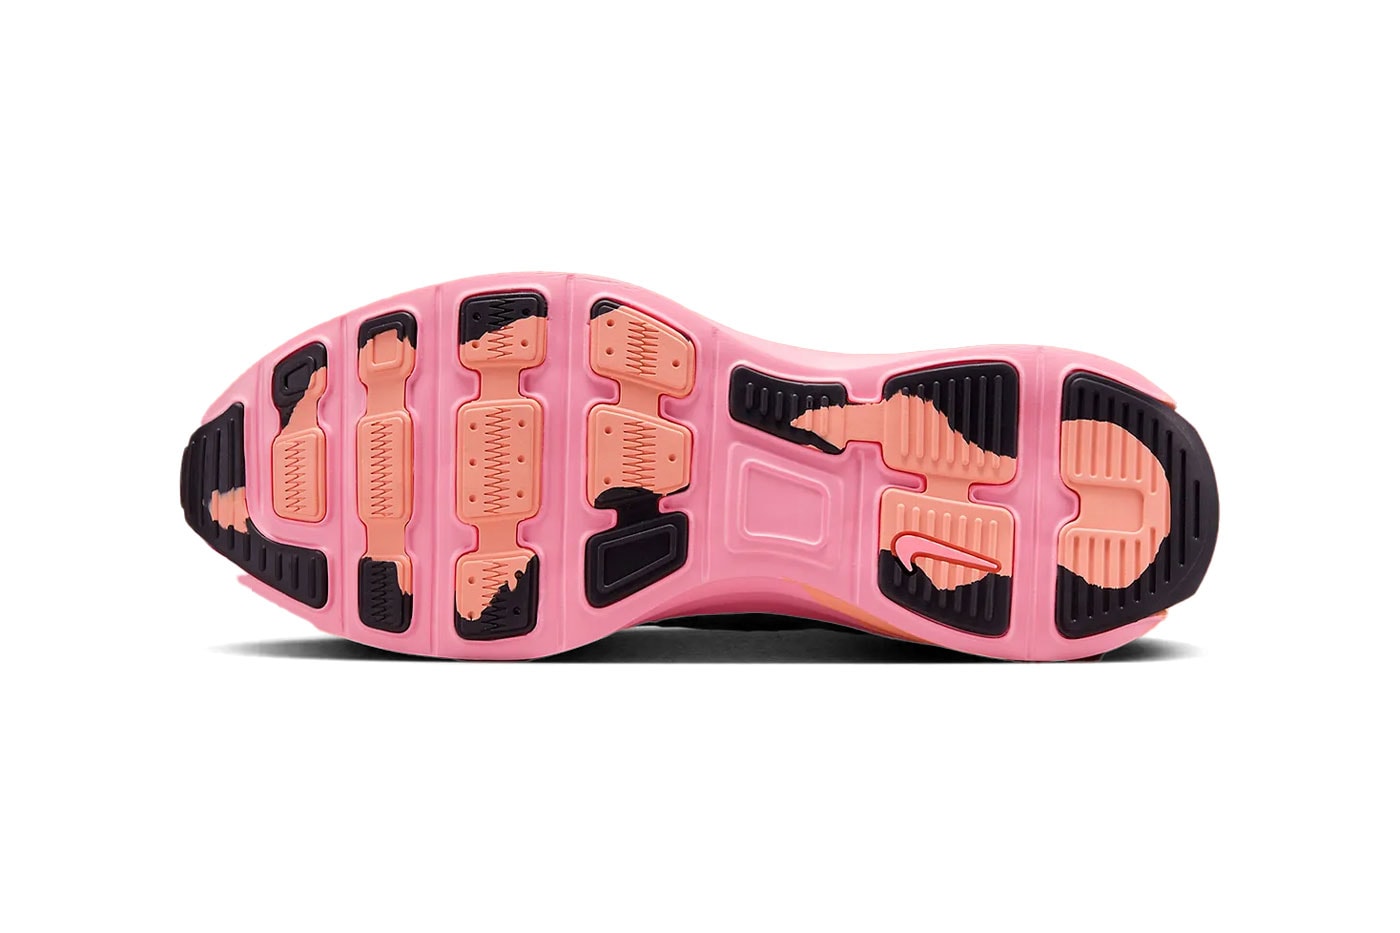 Nike Lunar Roam “Pink Sherbet” New Colorway Info